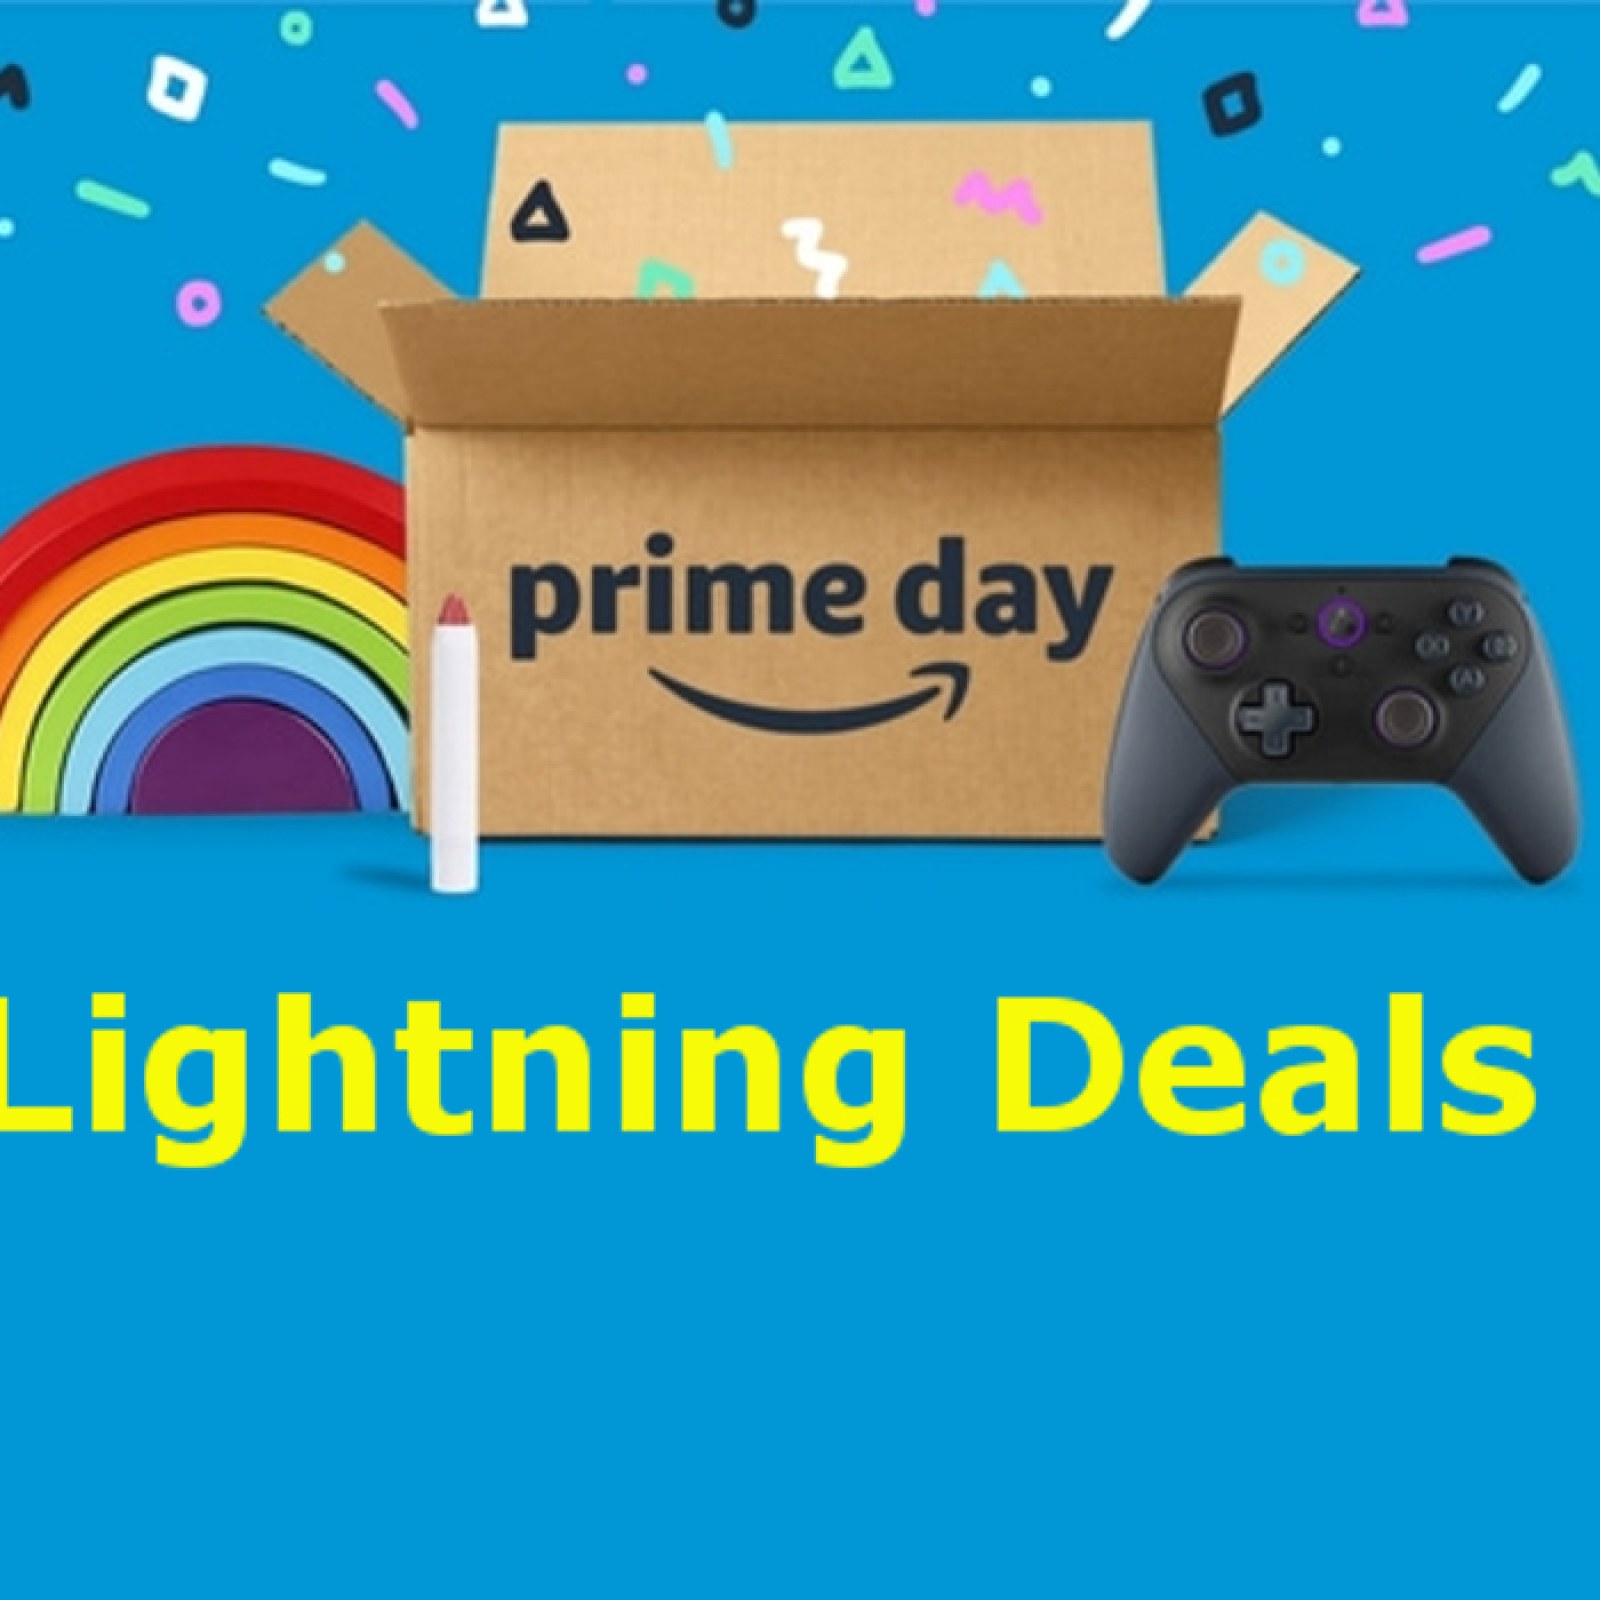 https://d.newsweek.com/en/full/1825590/amazon-prime-day-2021-lightning-deals.jpg?w=1600&h=1600&q=88&f=3172383f71eadd1a998a169394d68bf1